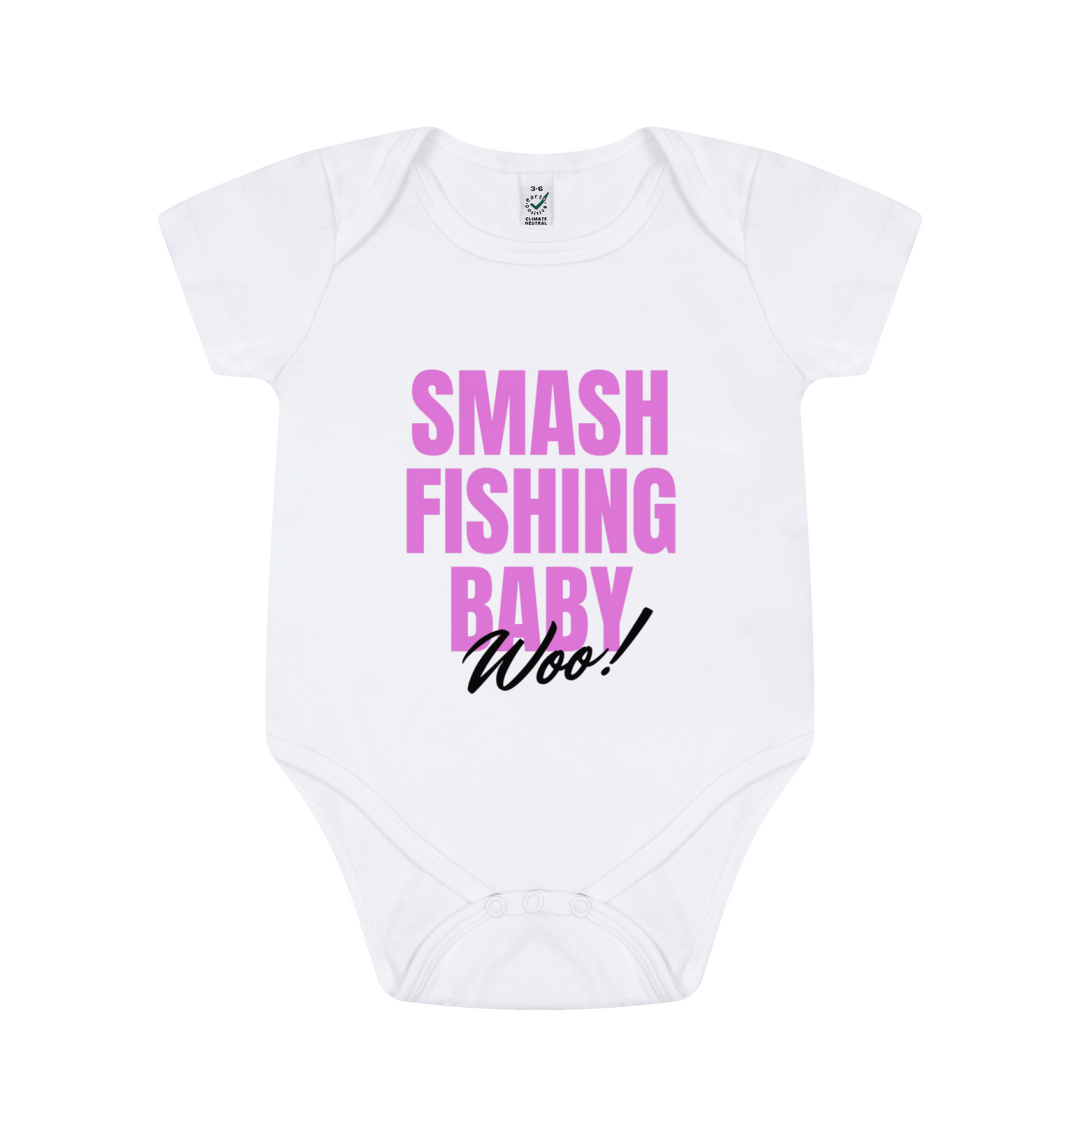 PINK SMASH FISHING BABY WOO! SHORT SLEEVE BABY GROW